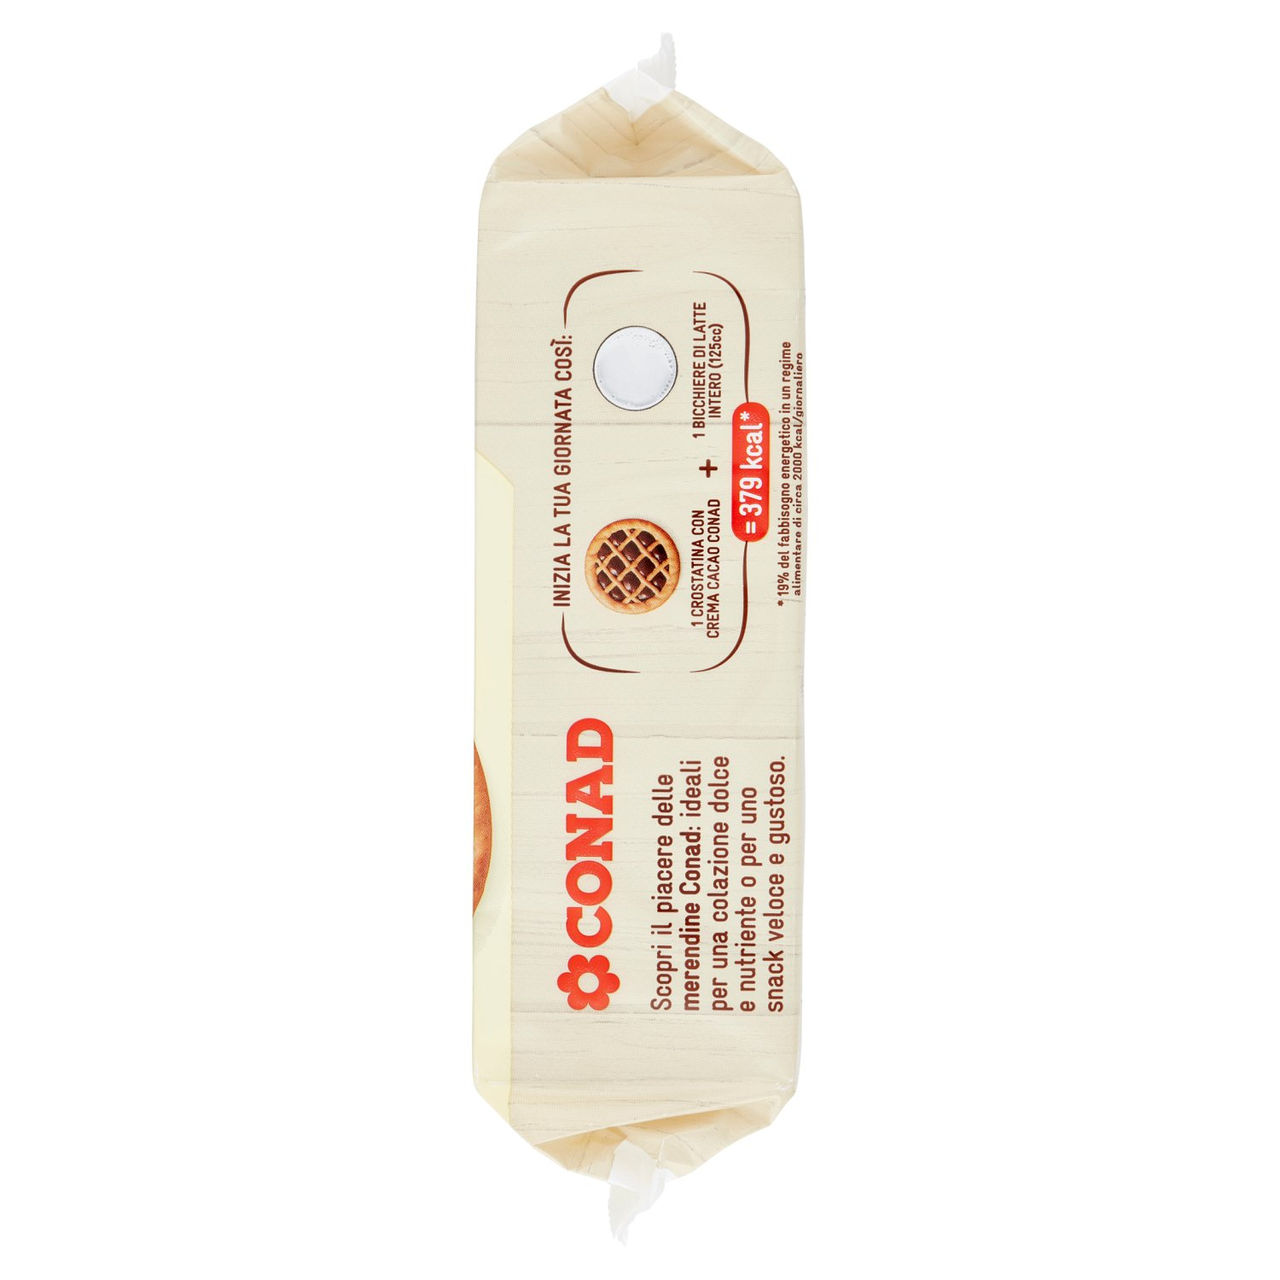 Crostatine al Cacao Conad in vendita online